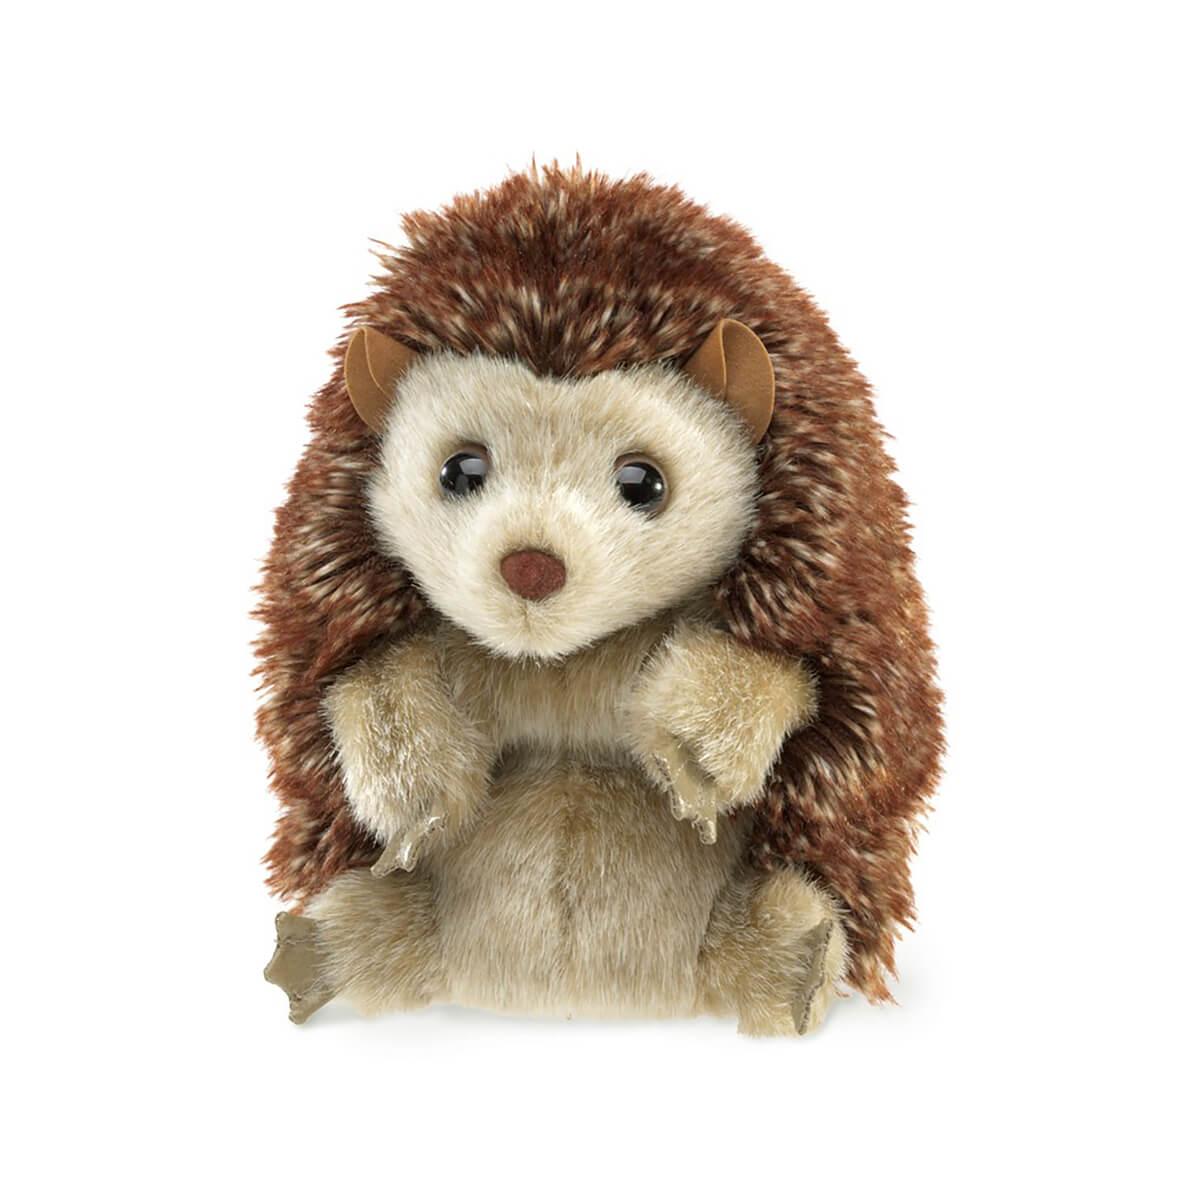  Plush Hedgehog Hand Puppet